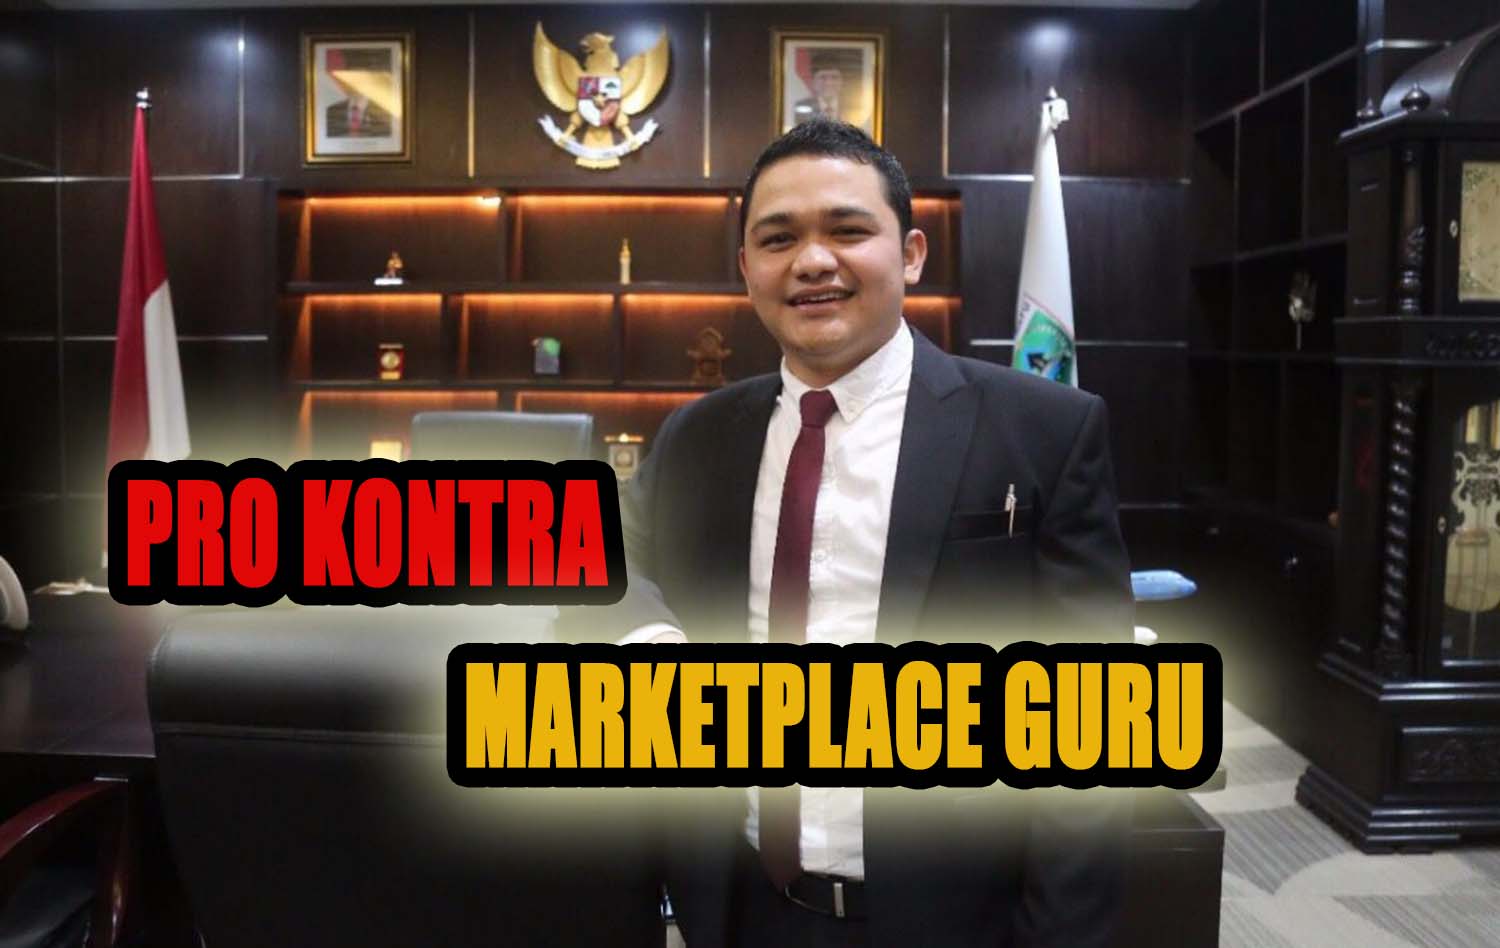 Soal Marketplace Guru, Ini Komentar Ahli Pendidikan Bahasa Indonesia!